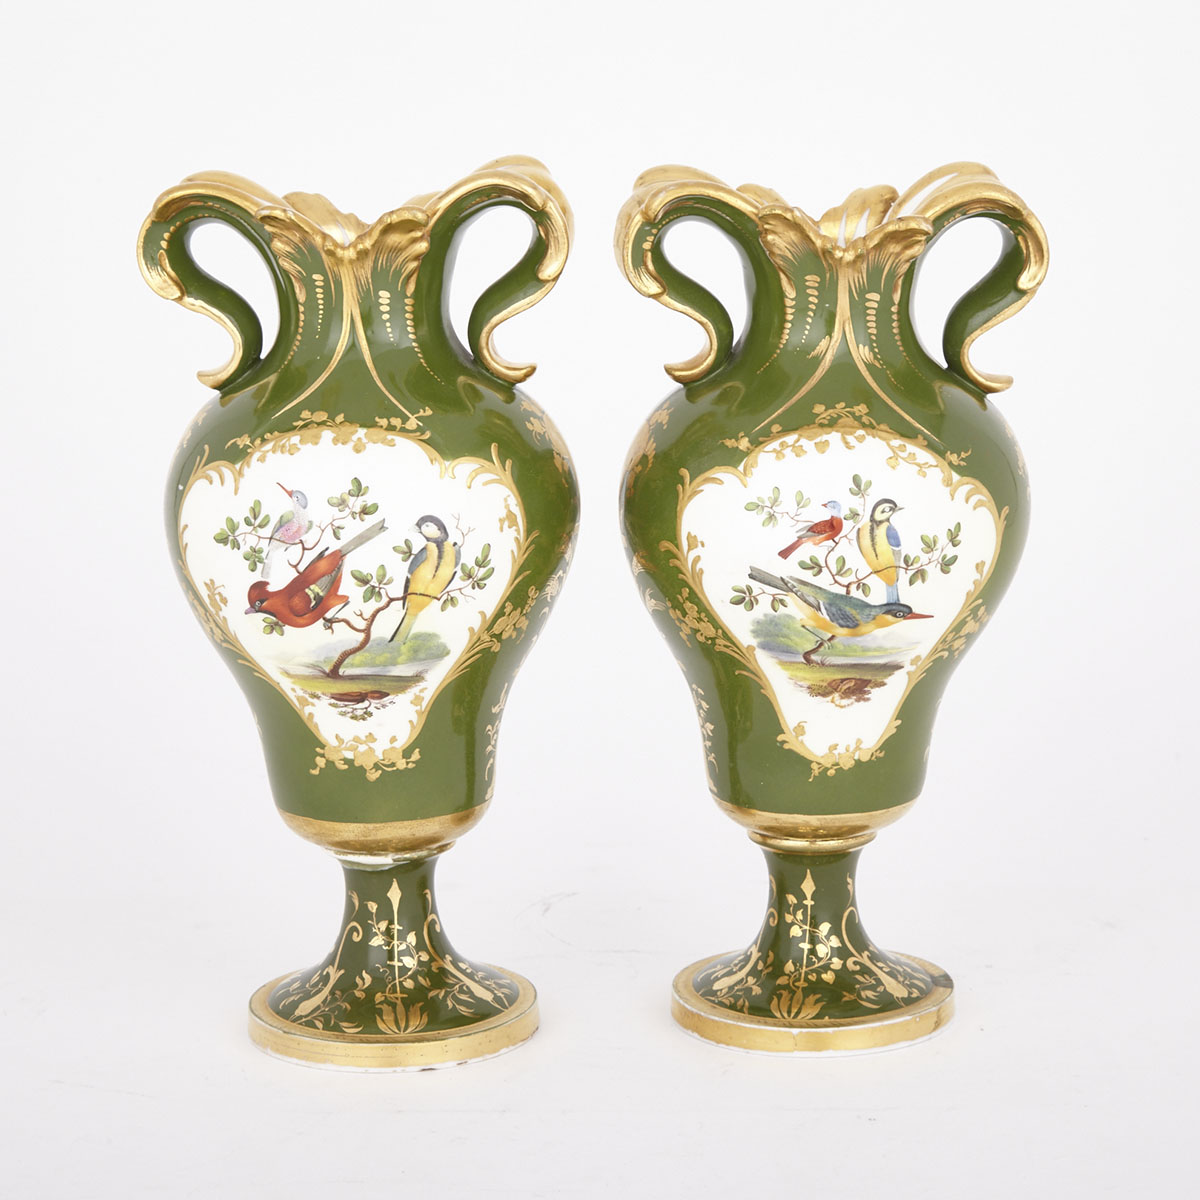 Pair of English Porcelain Green-Ground Mantel Vases, c.1840